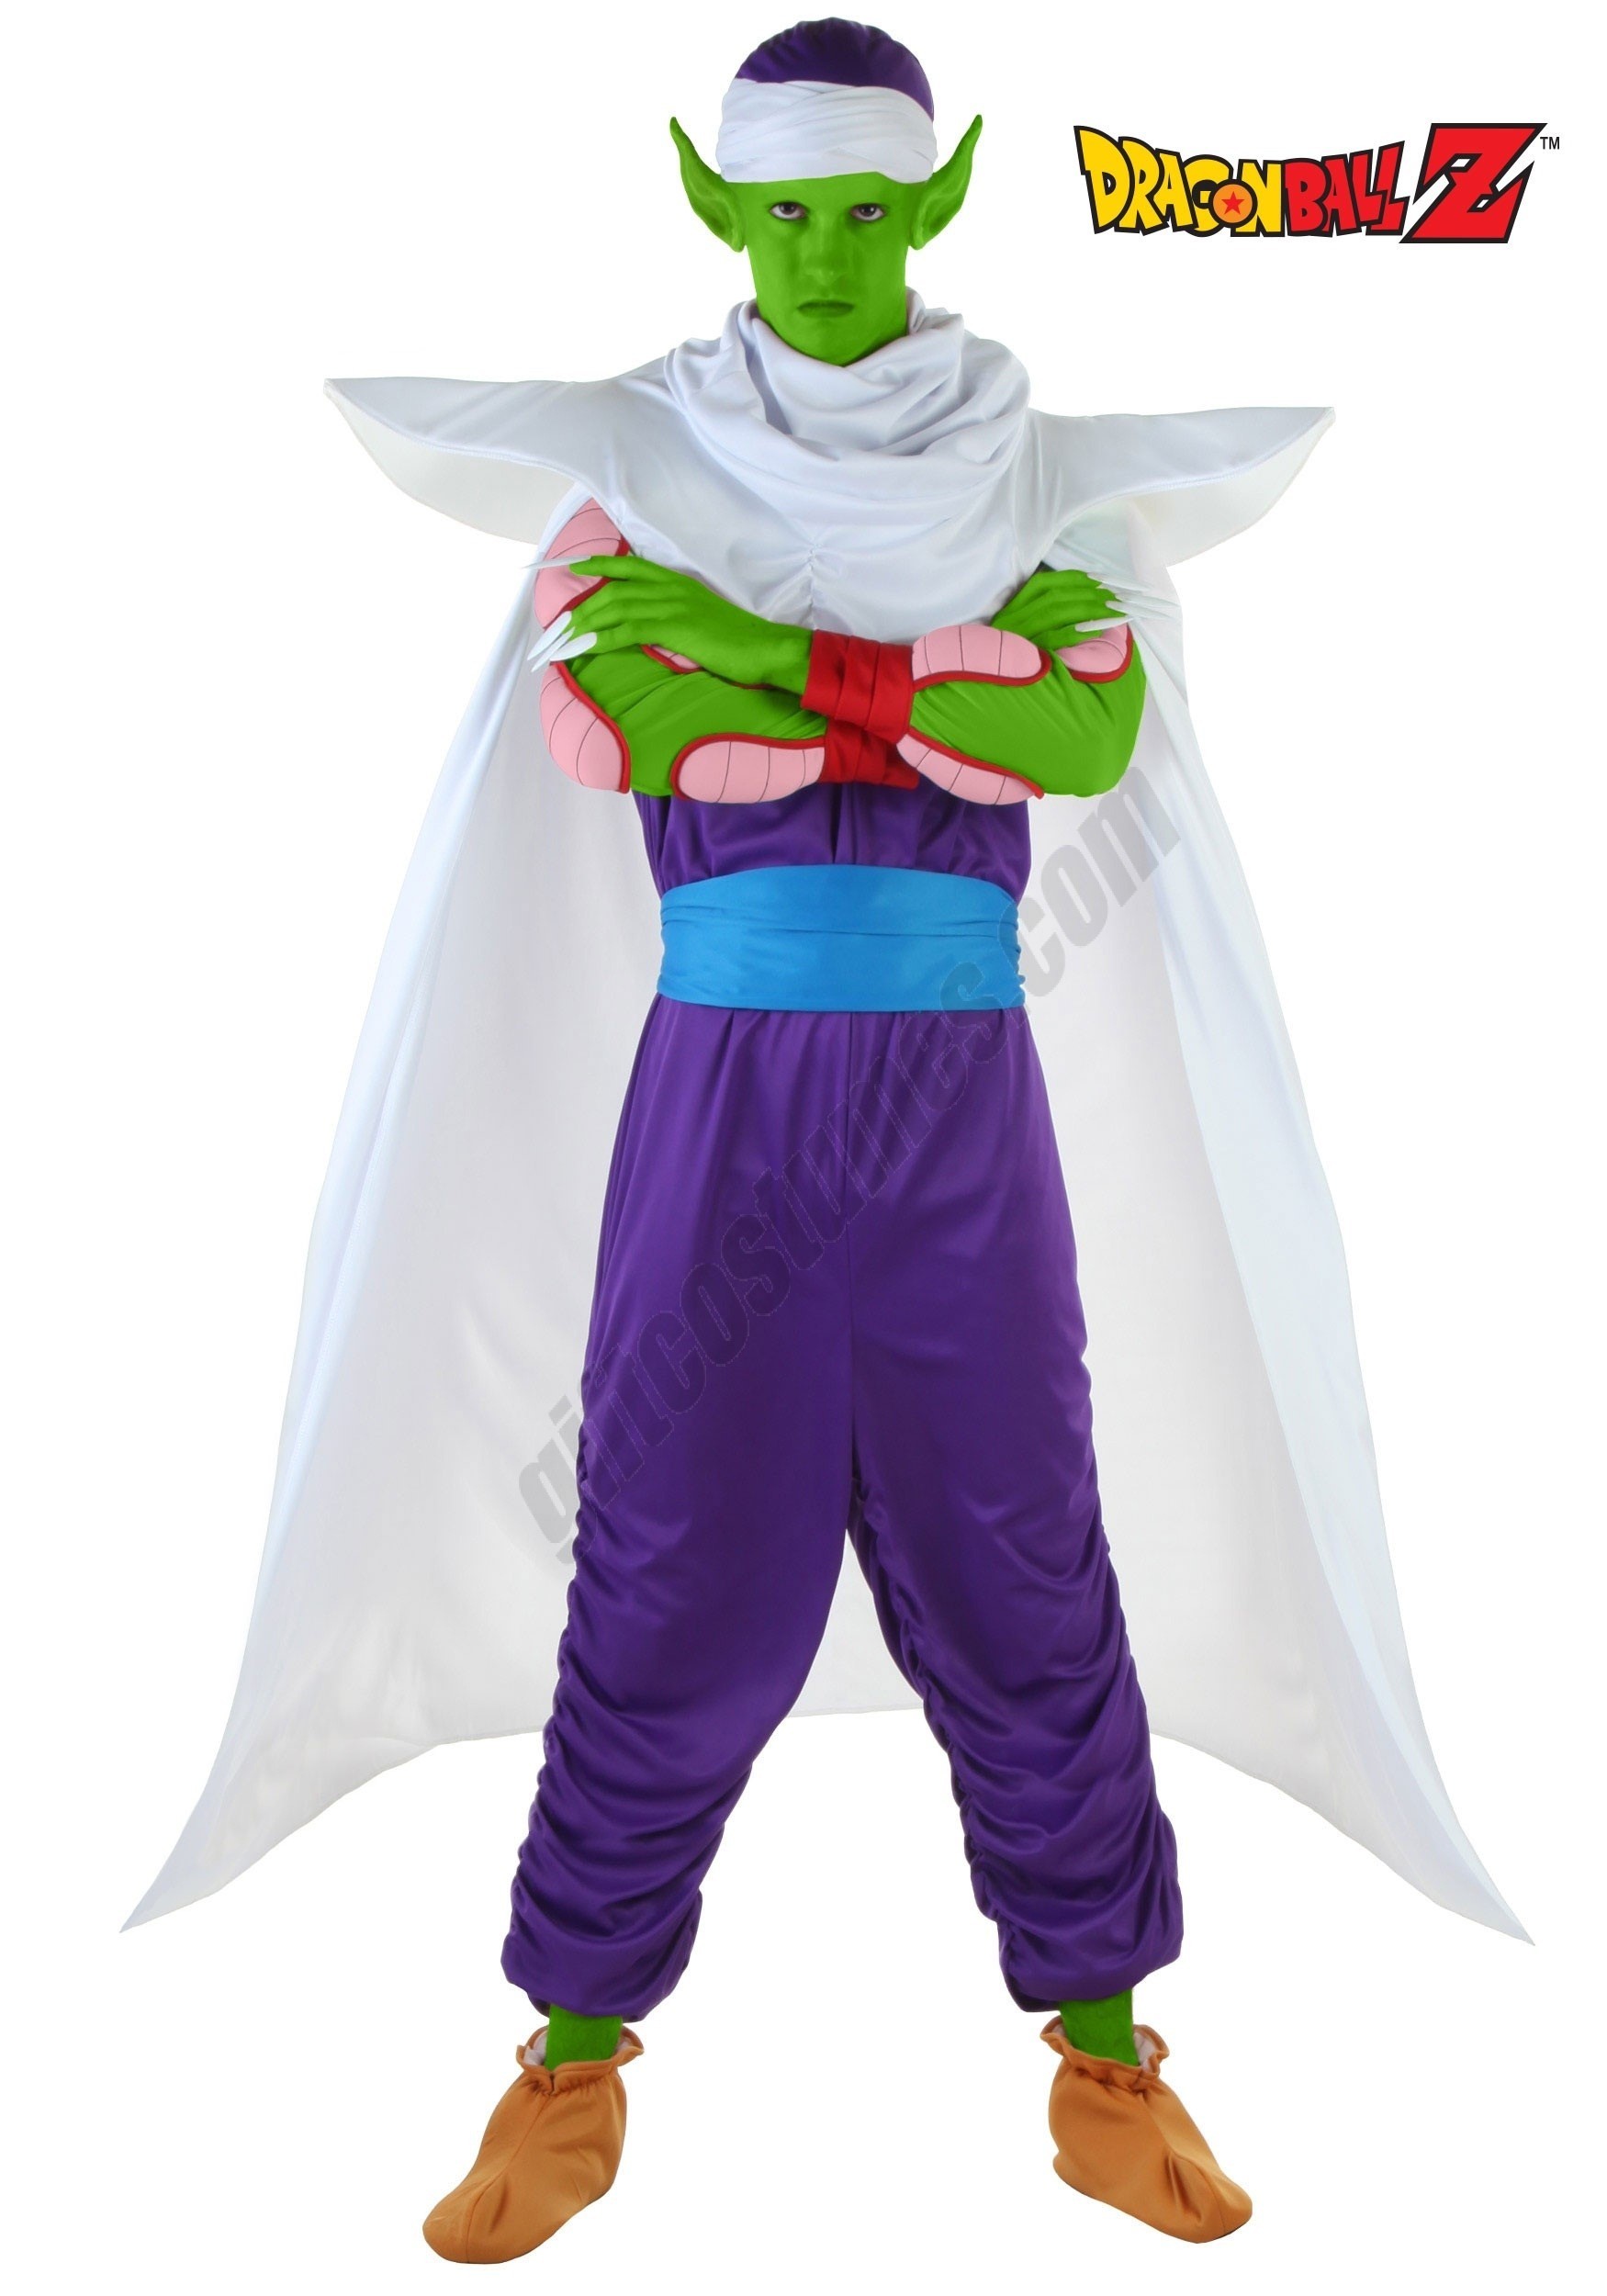 Dragon Ball Z Piccolo Costume Promotions - Dragon Ball Z Piccolo Costume Promotions